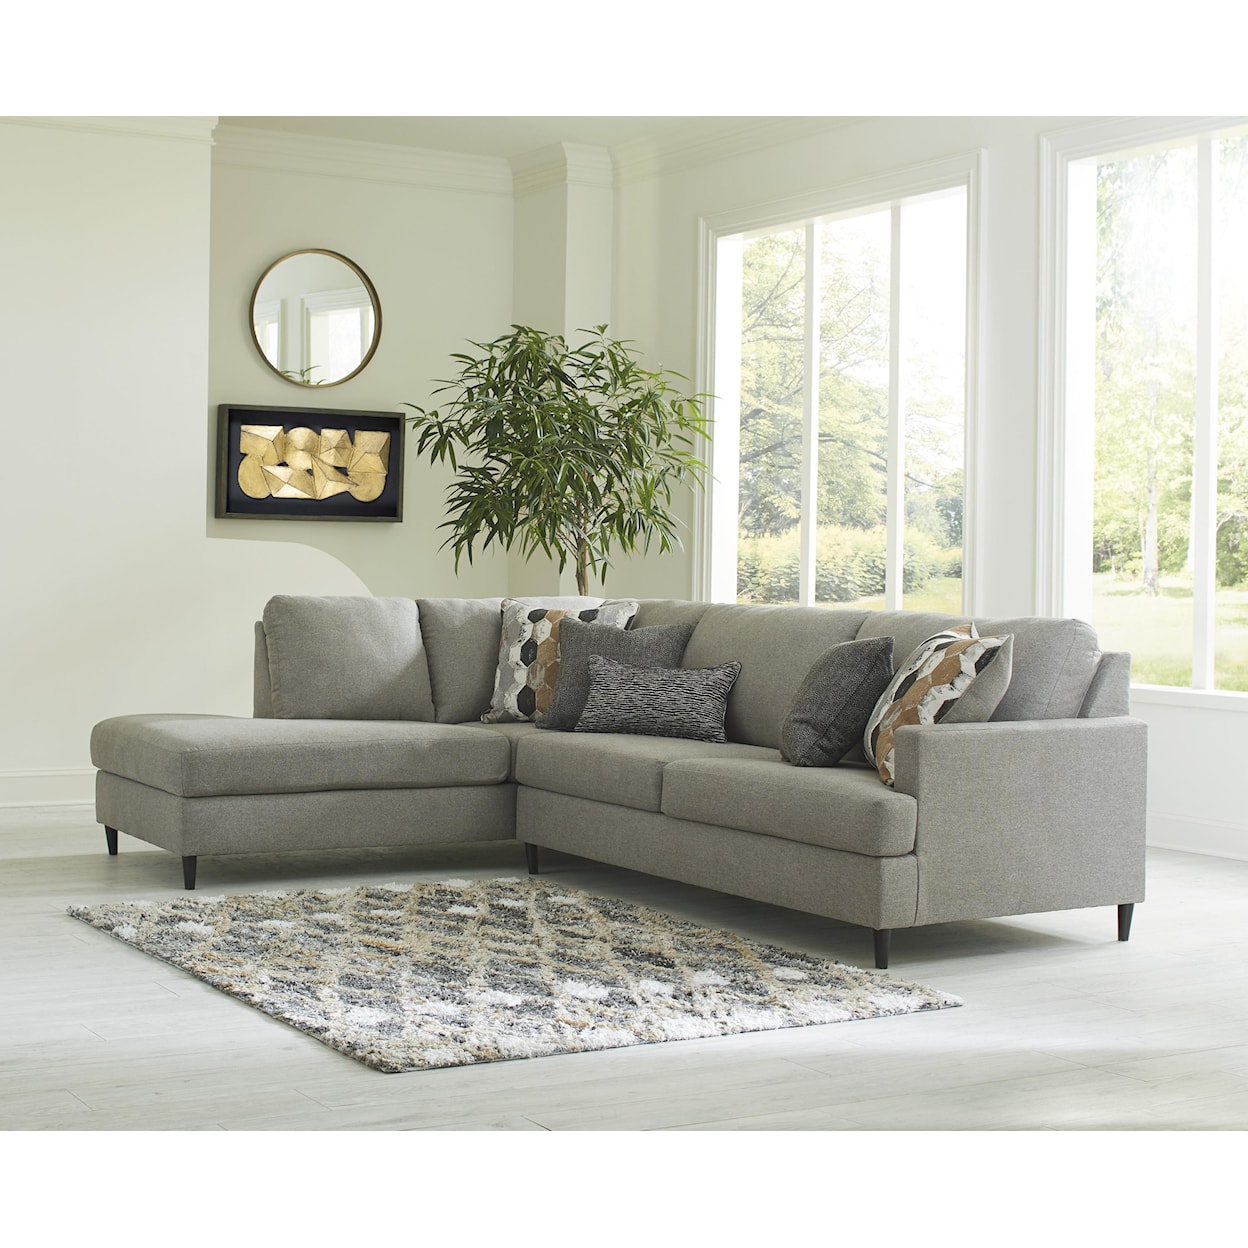 Ashley Furniture Santasia 2 Piece Sofa Chaise Sectional